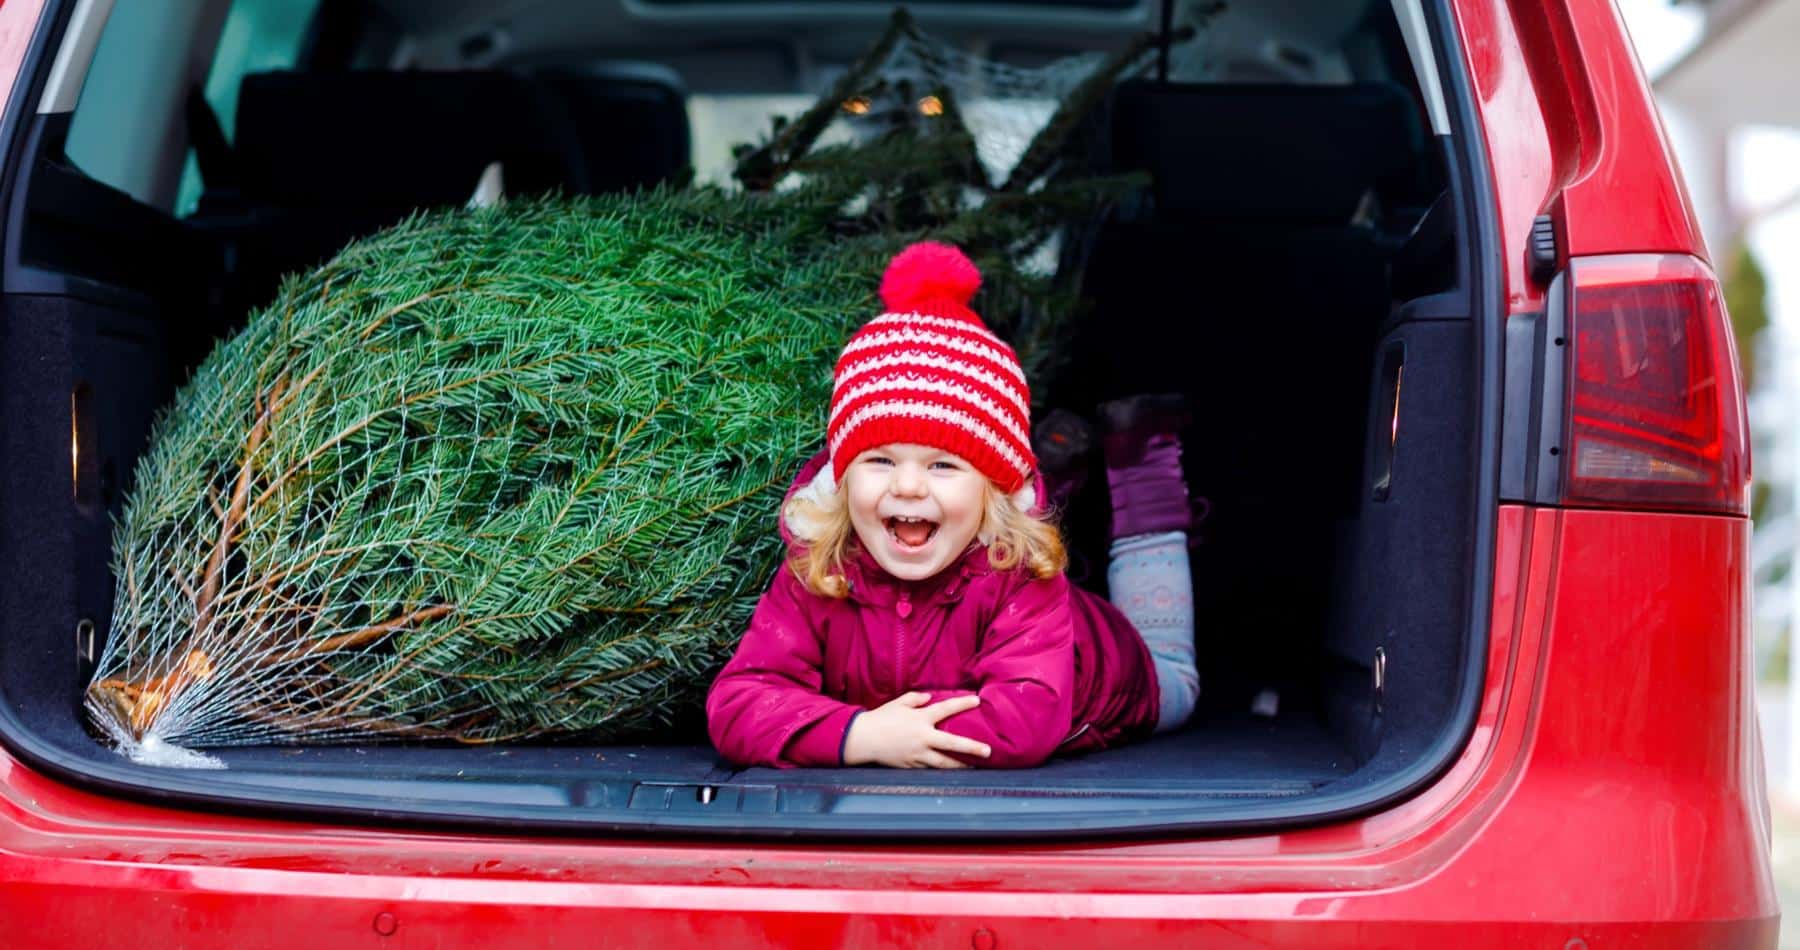 Little girl next to Christmas tree